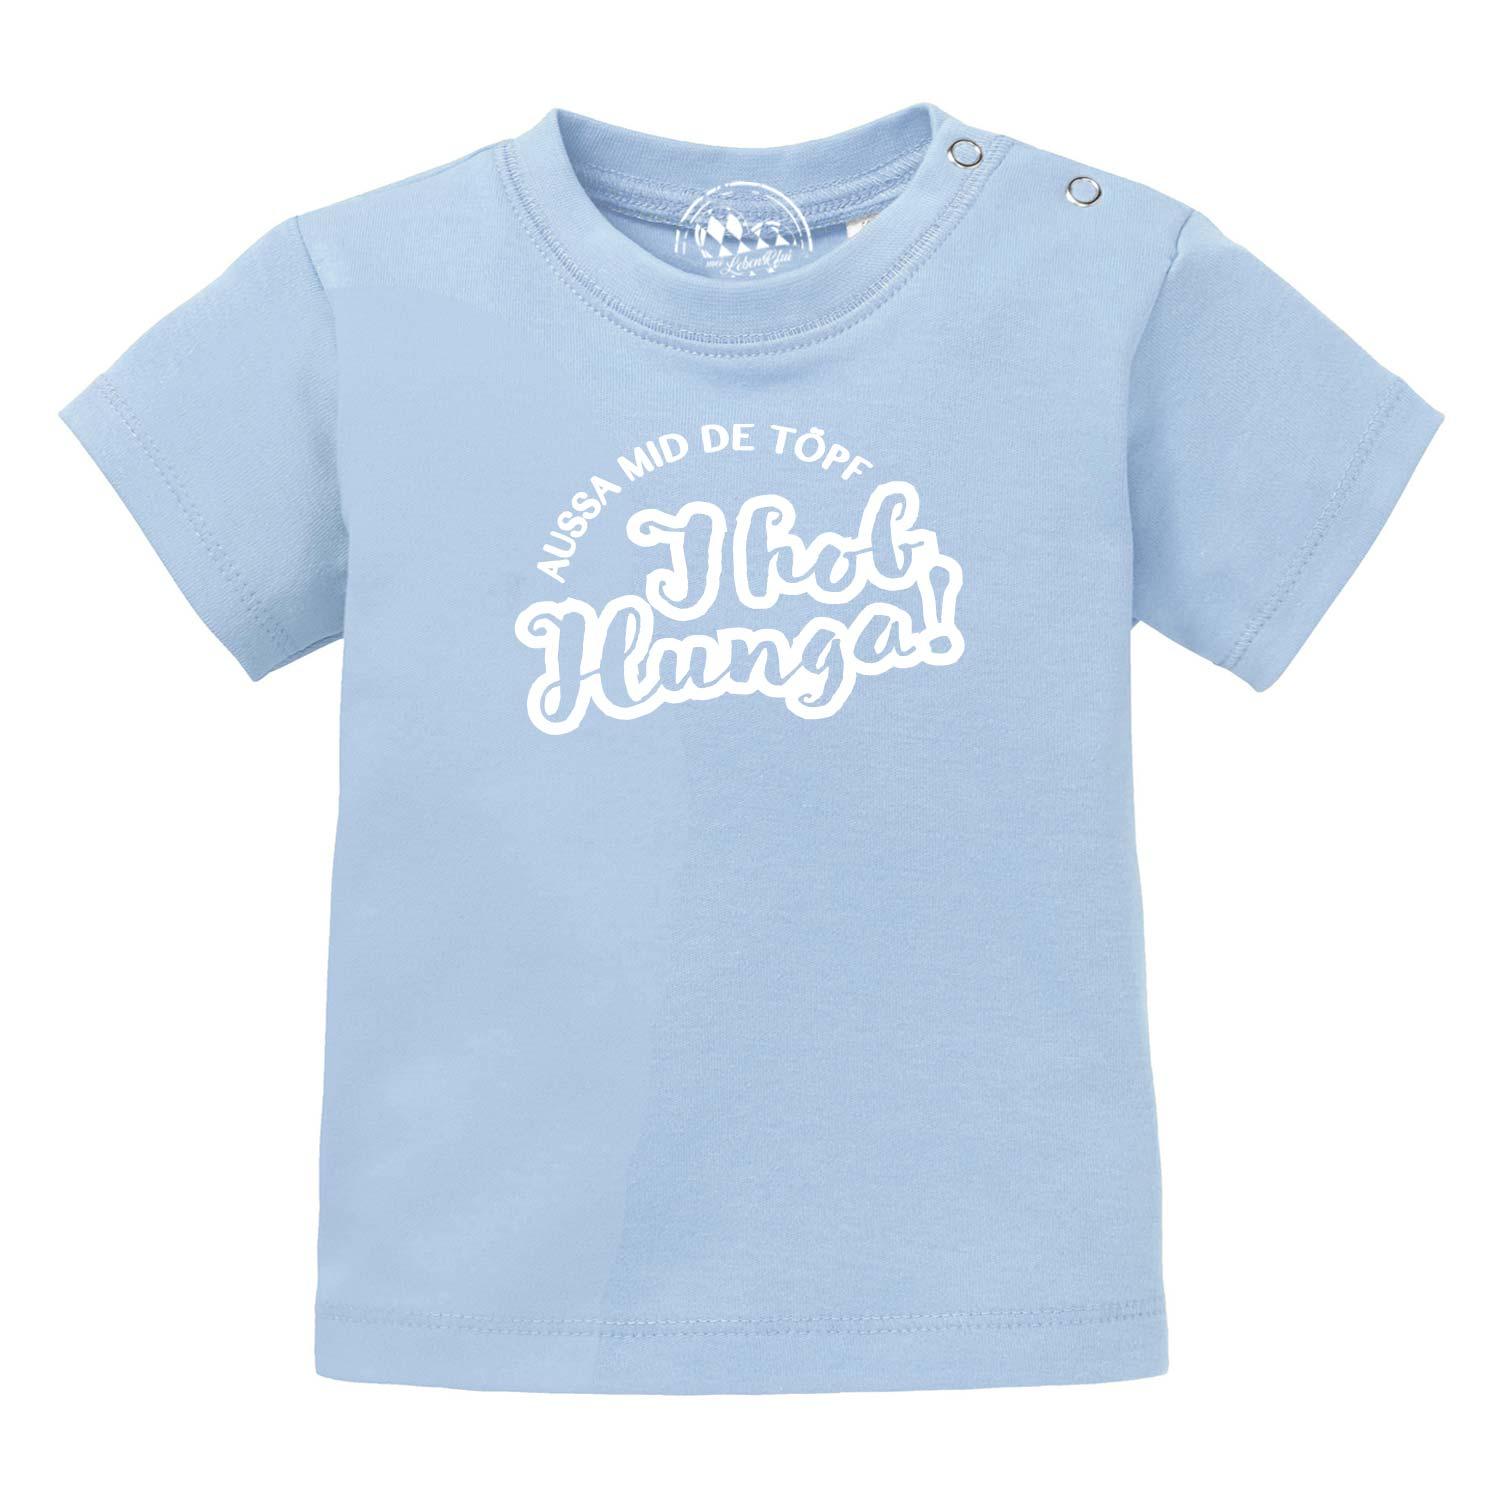 Baby T-Shirt "Aussa mid de Töpf…" - bavariashop - mei LebensGfui